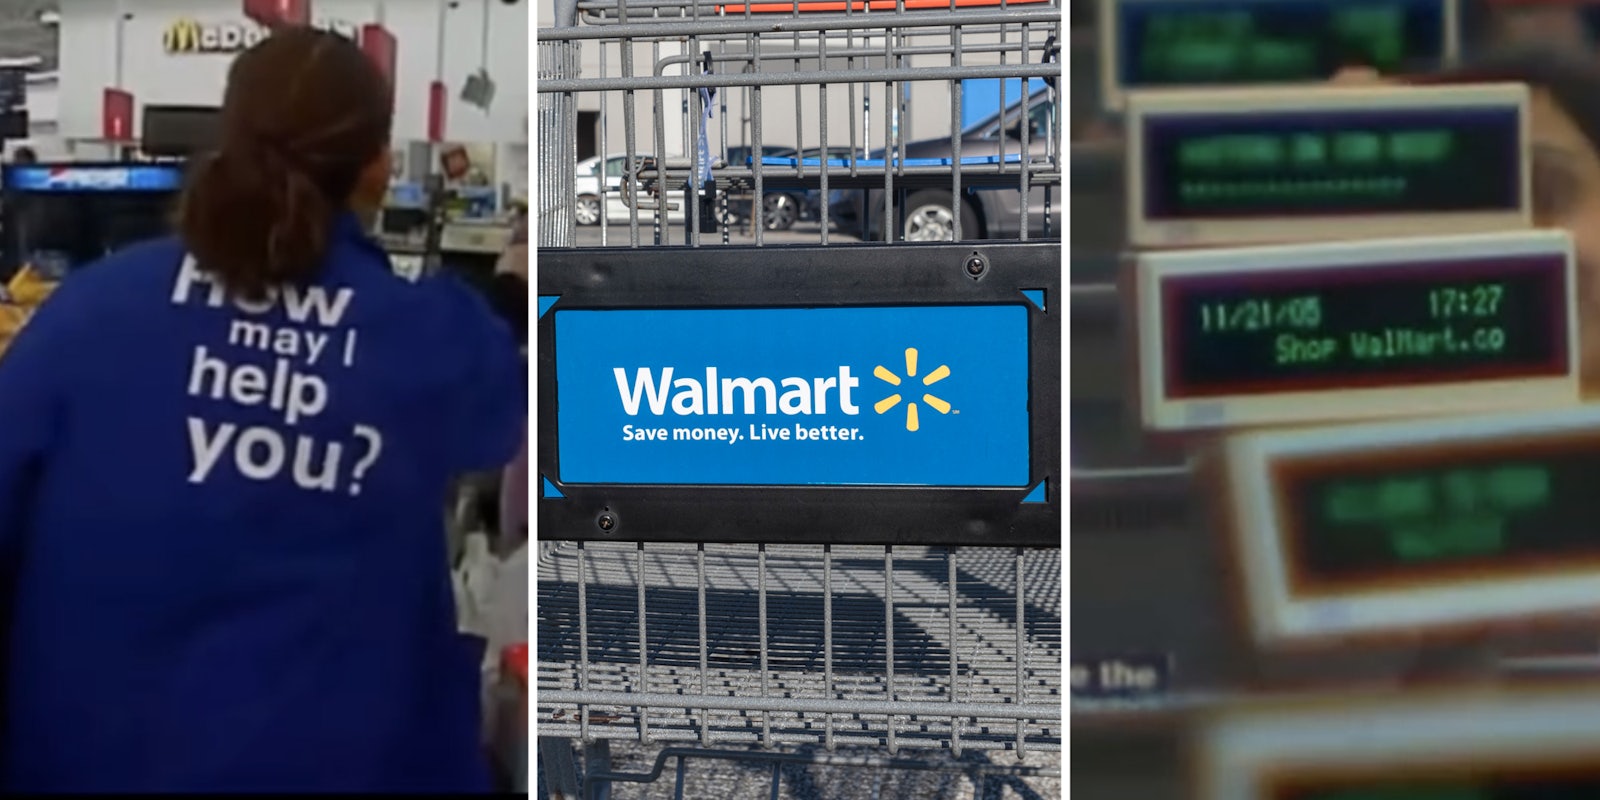 Cashier(l), Walmart cart(c), Cash register(r)